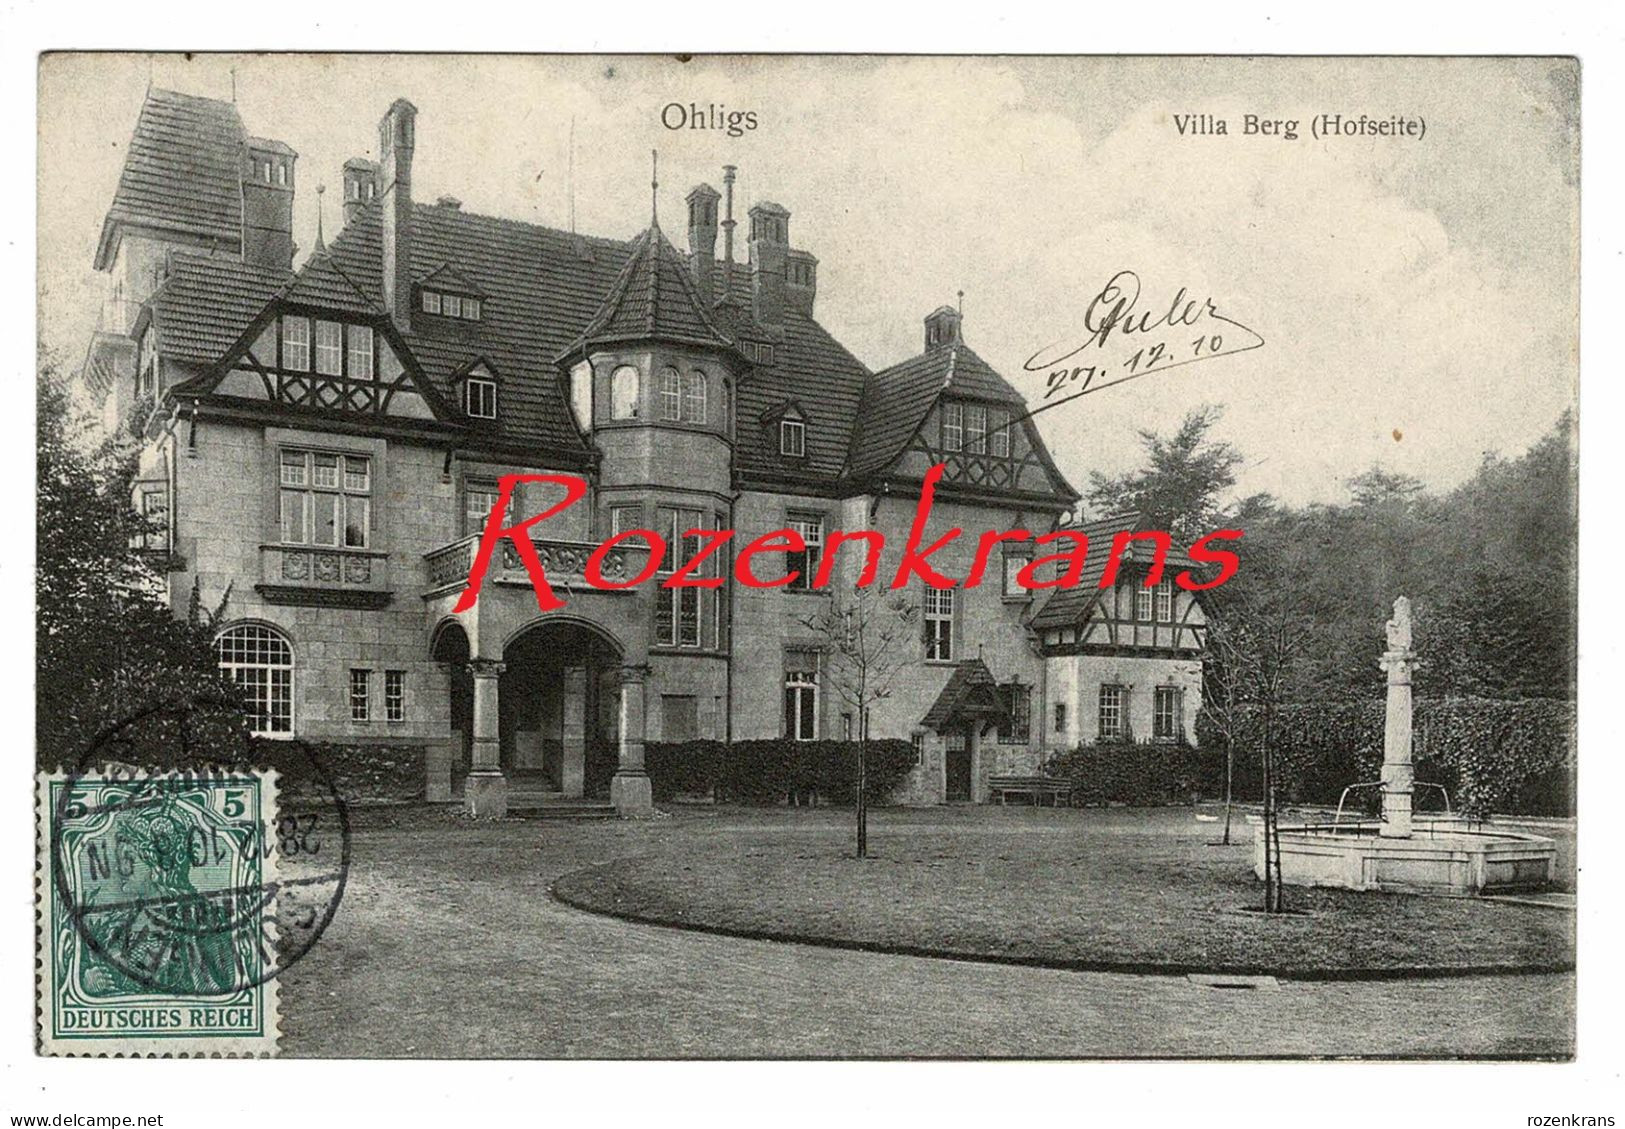 Nordrhein-Westfalen Ohligs Villa Berg Hofseite Solingen Carte Postale Old Postcard AK CPA - Solingen